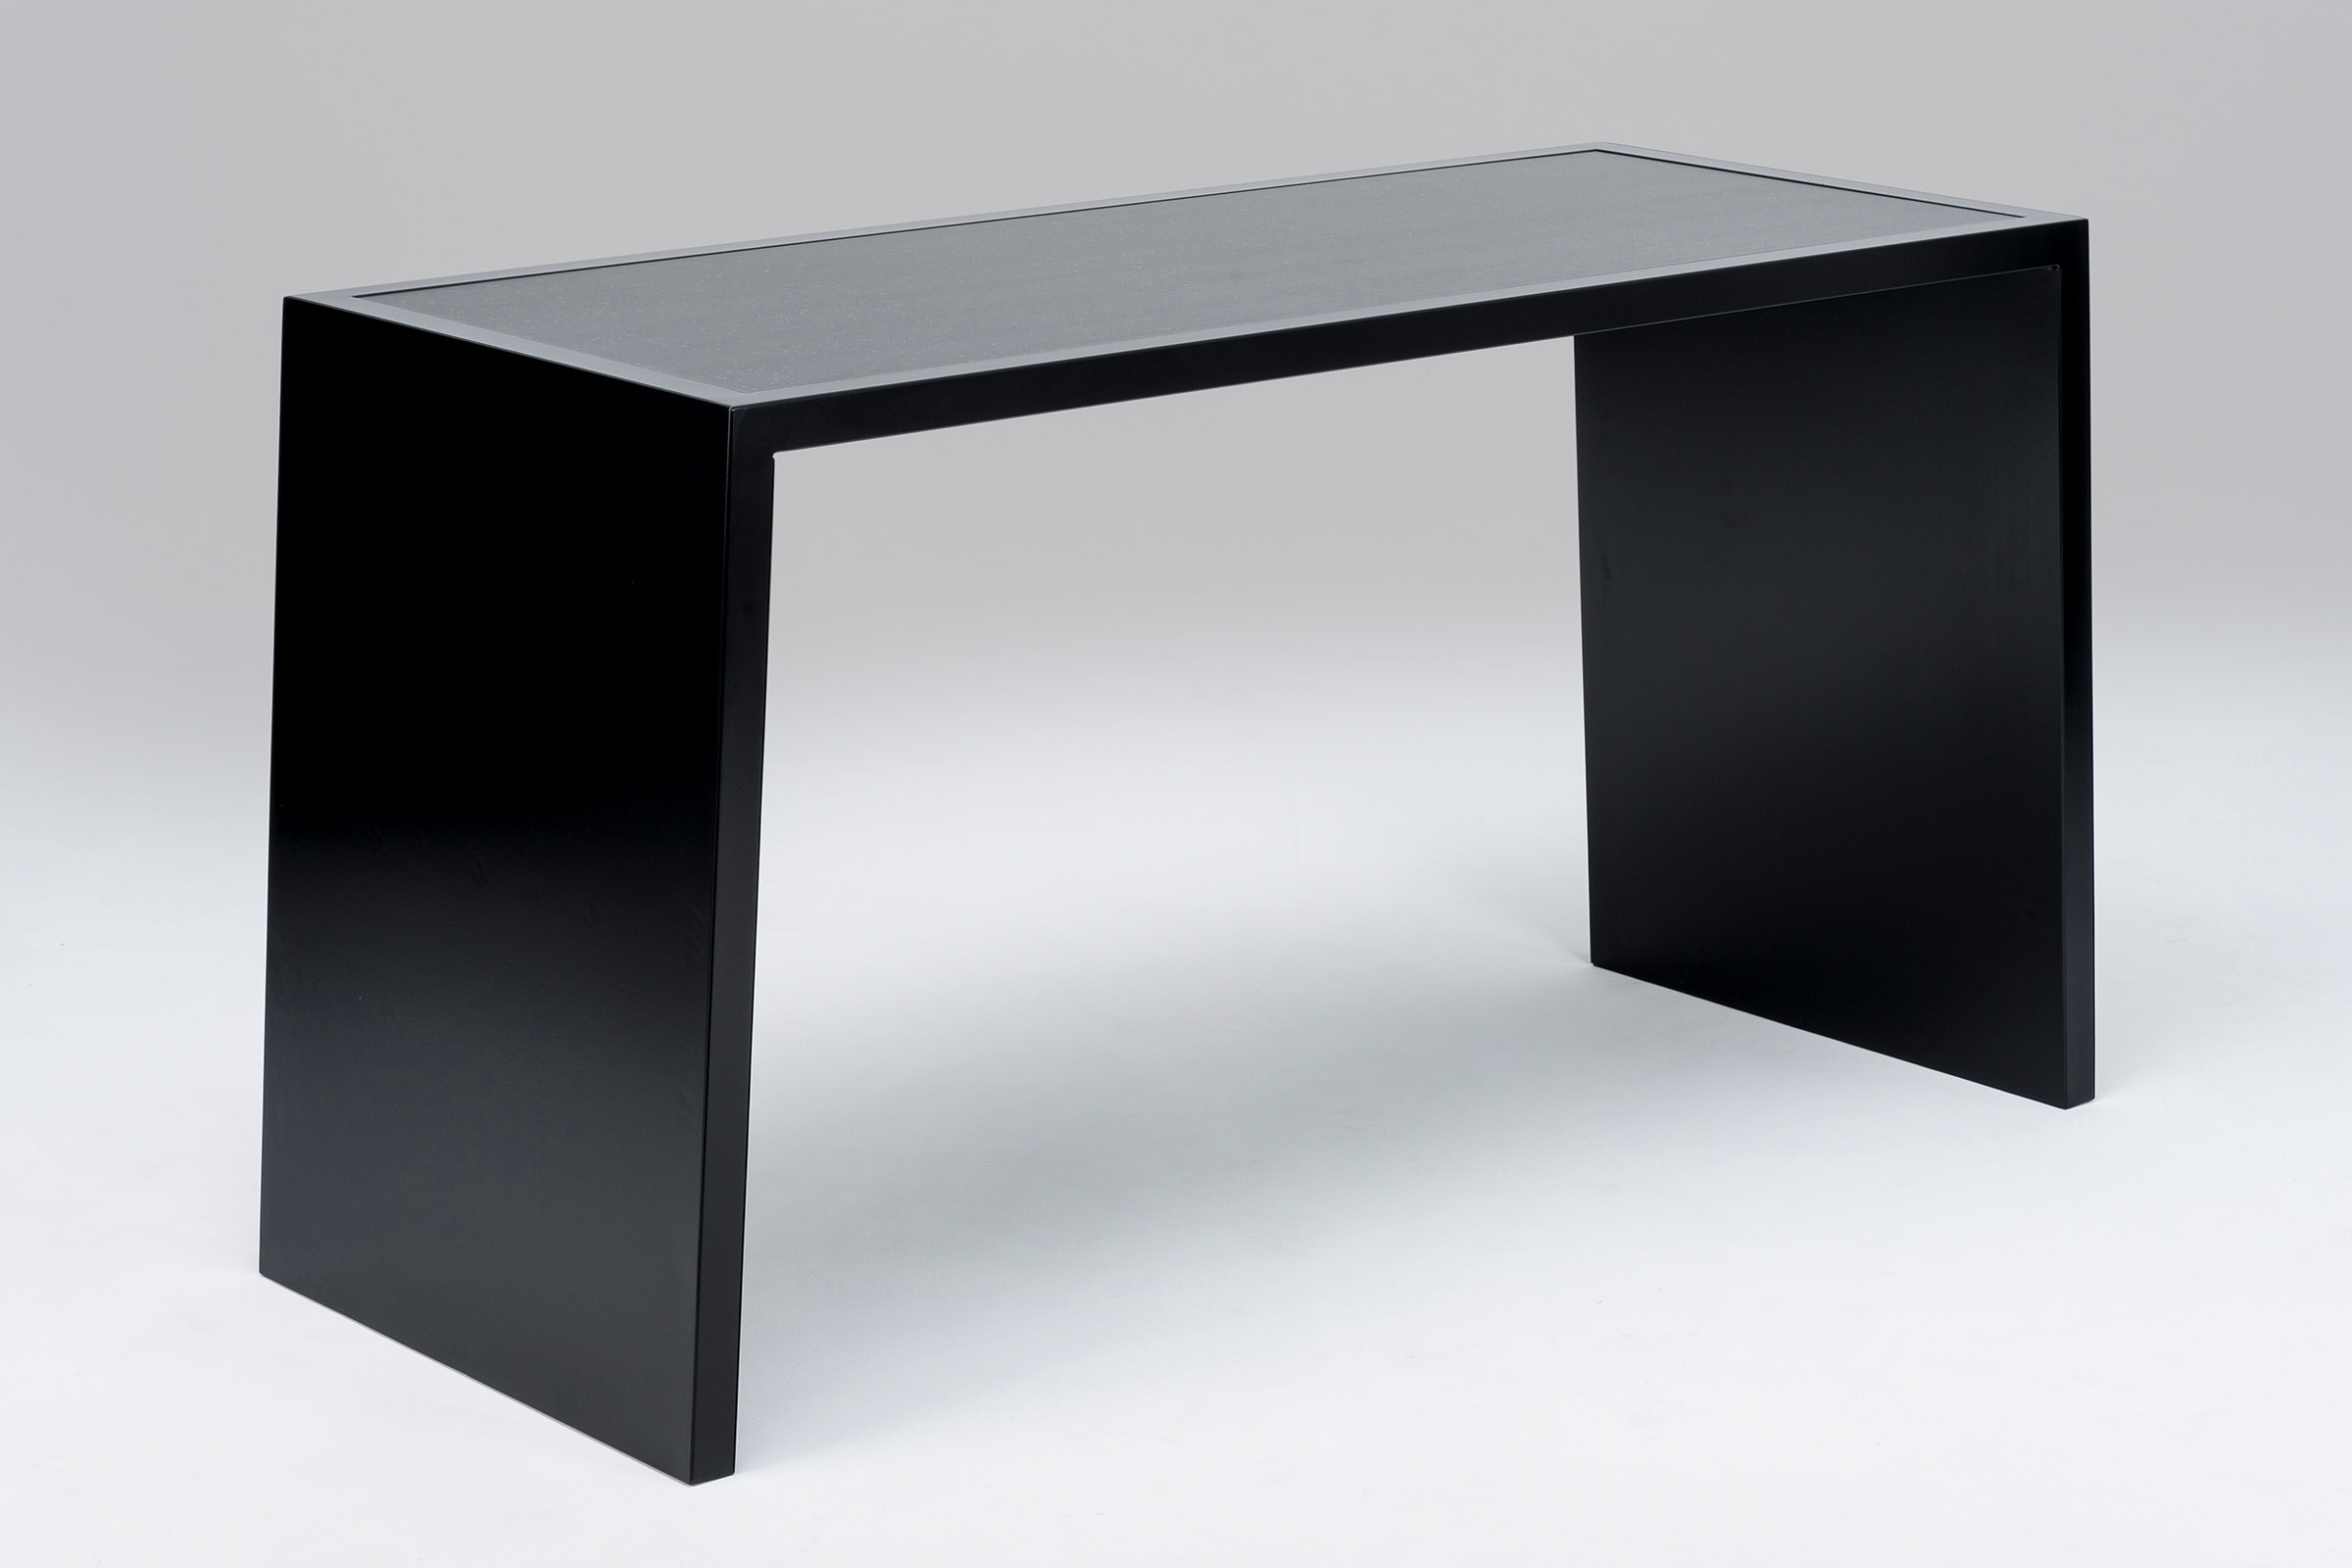 Instantly the hero of this room is the black modern minimalist designer table by Australian designer francocrea